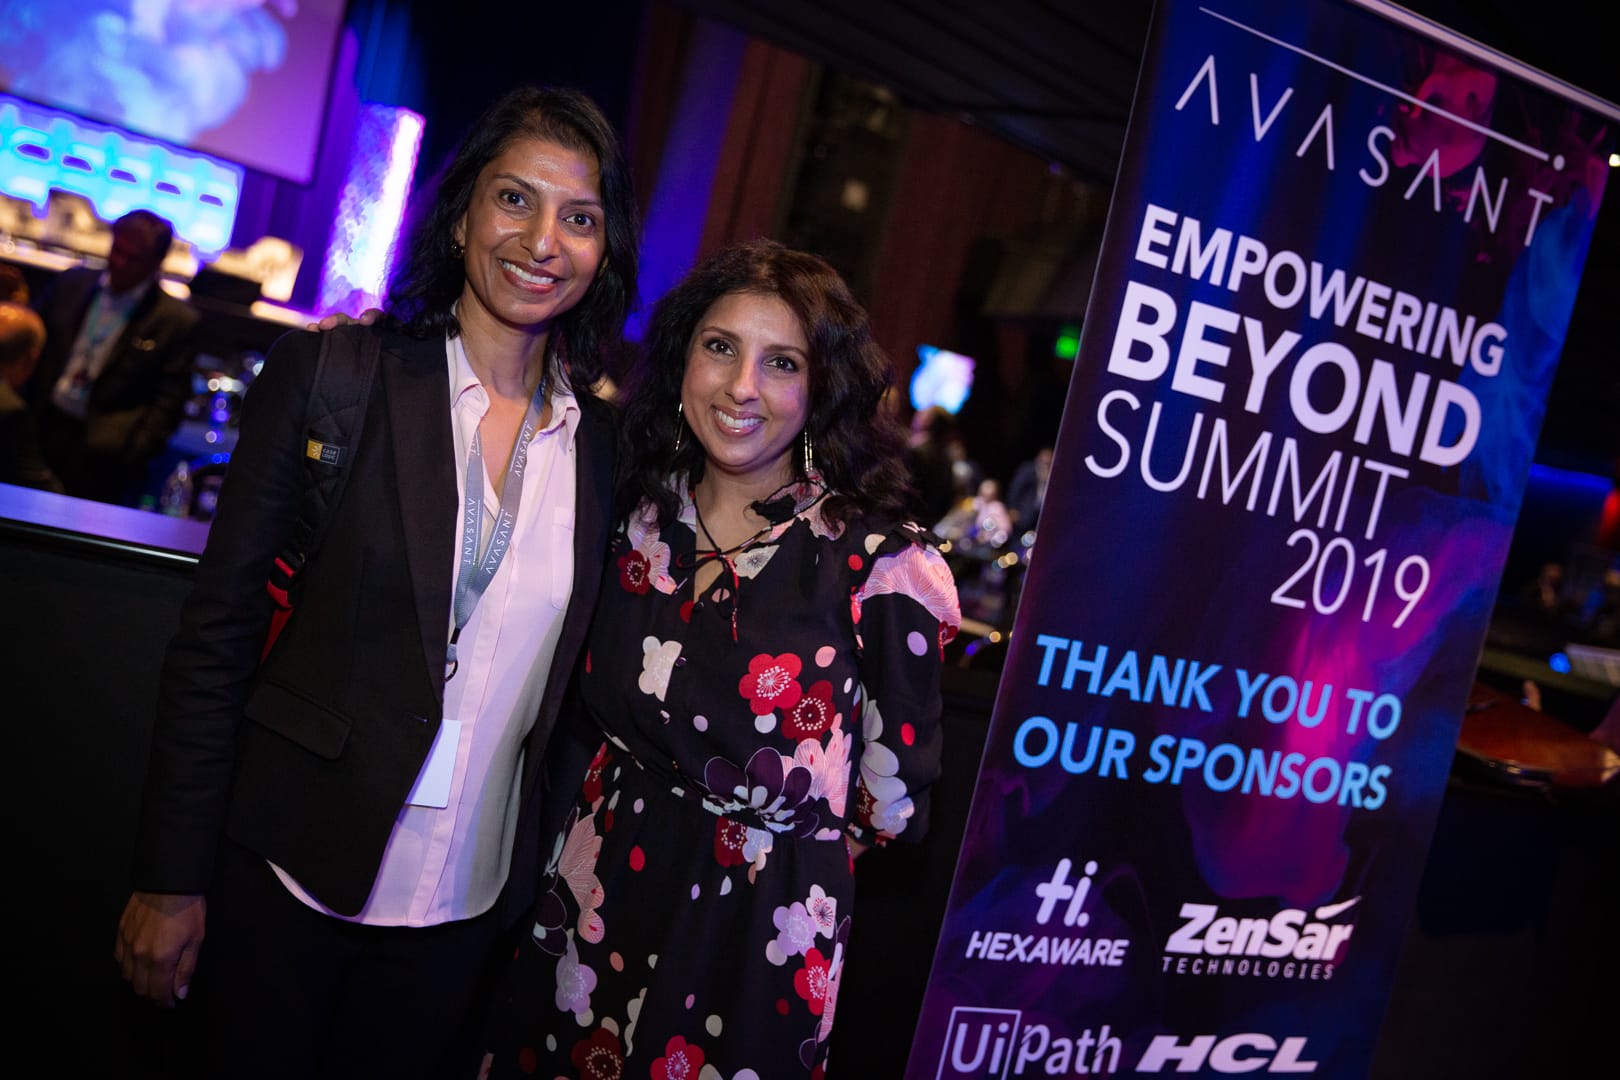 Avasant Empowering Beyond Summit 2019: Dare to Dream